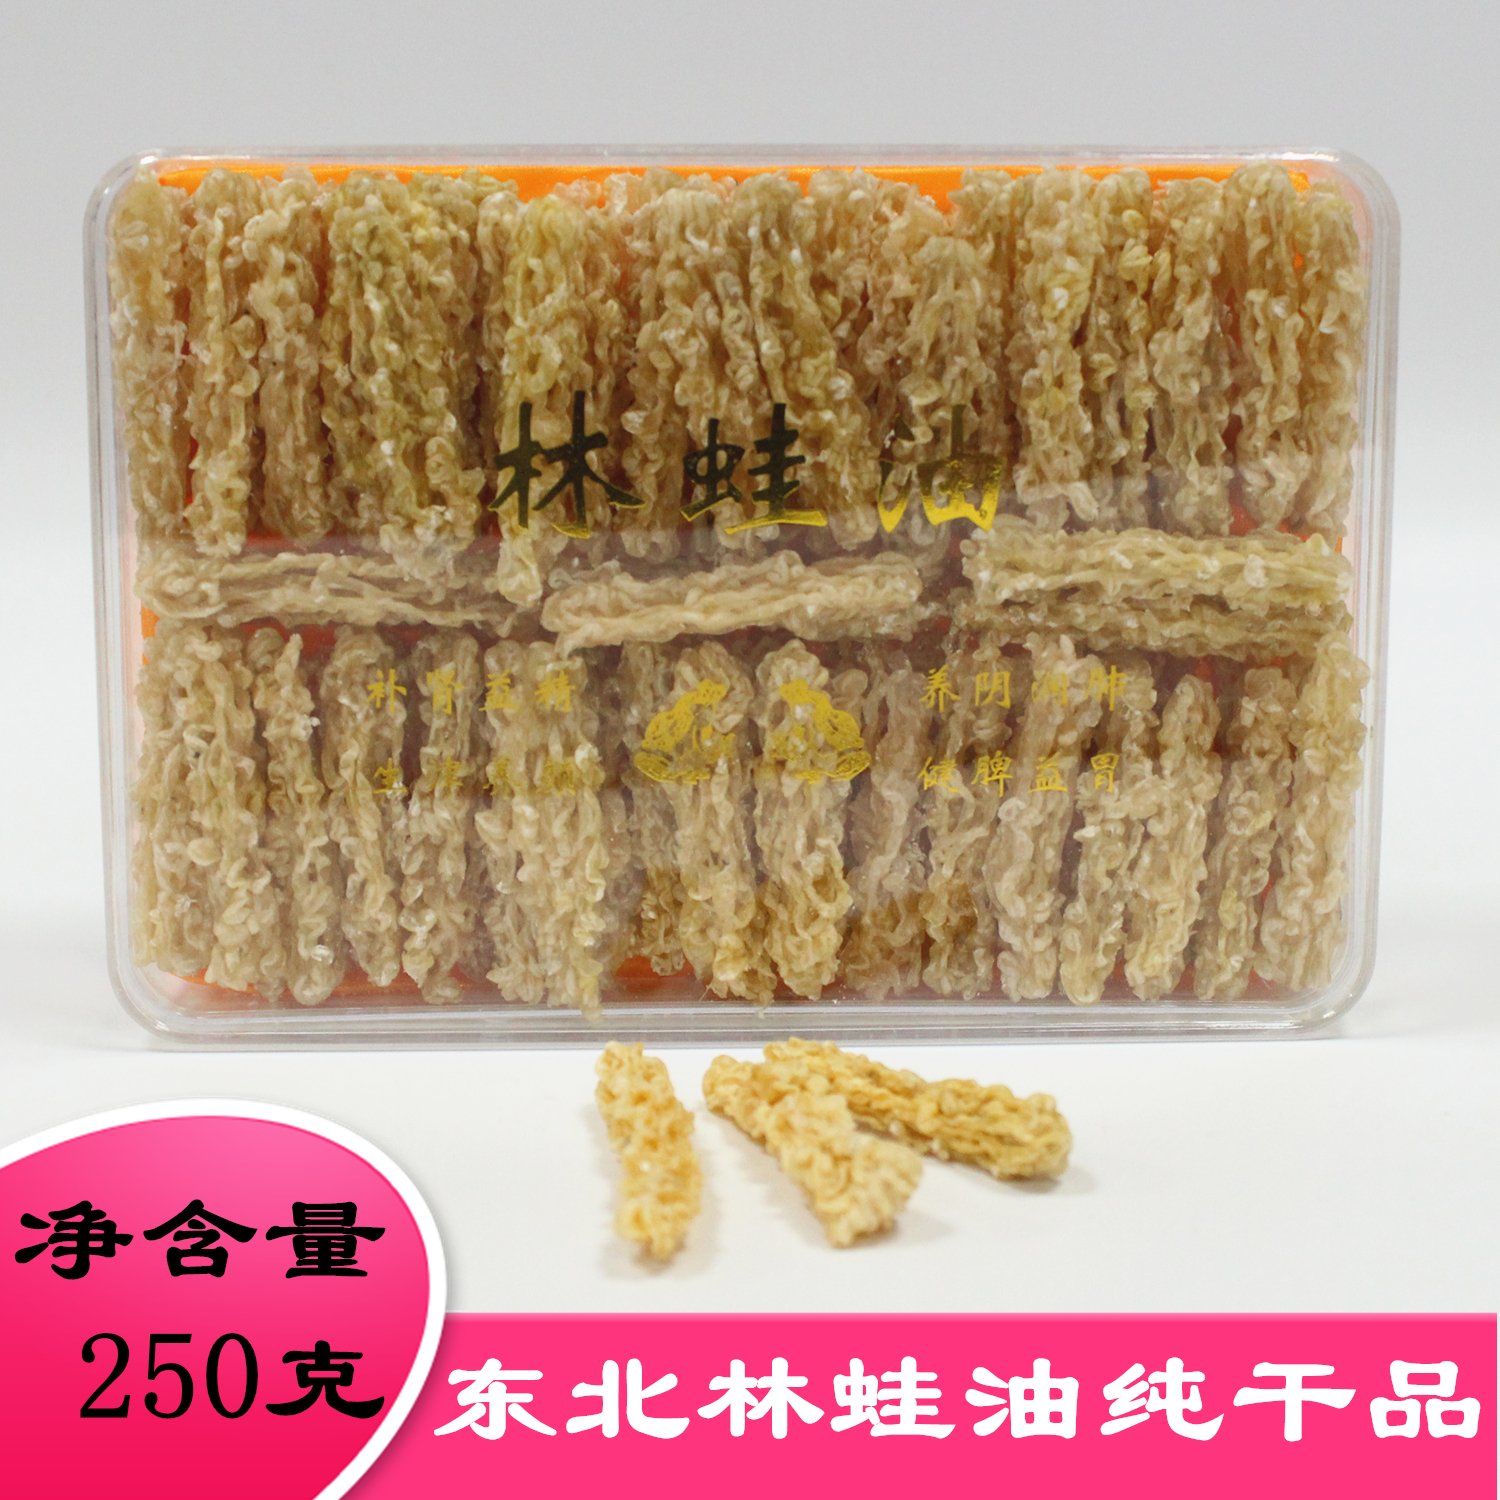 Changbai Mountain snow clam oil 250 klin frog oil Jilin Ji'an foot dry moisture-free impurity-free toad oil gift box